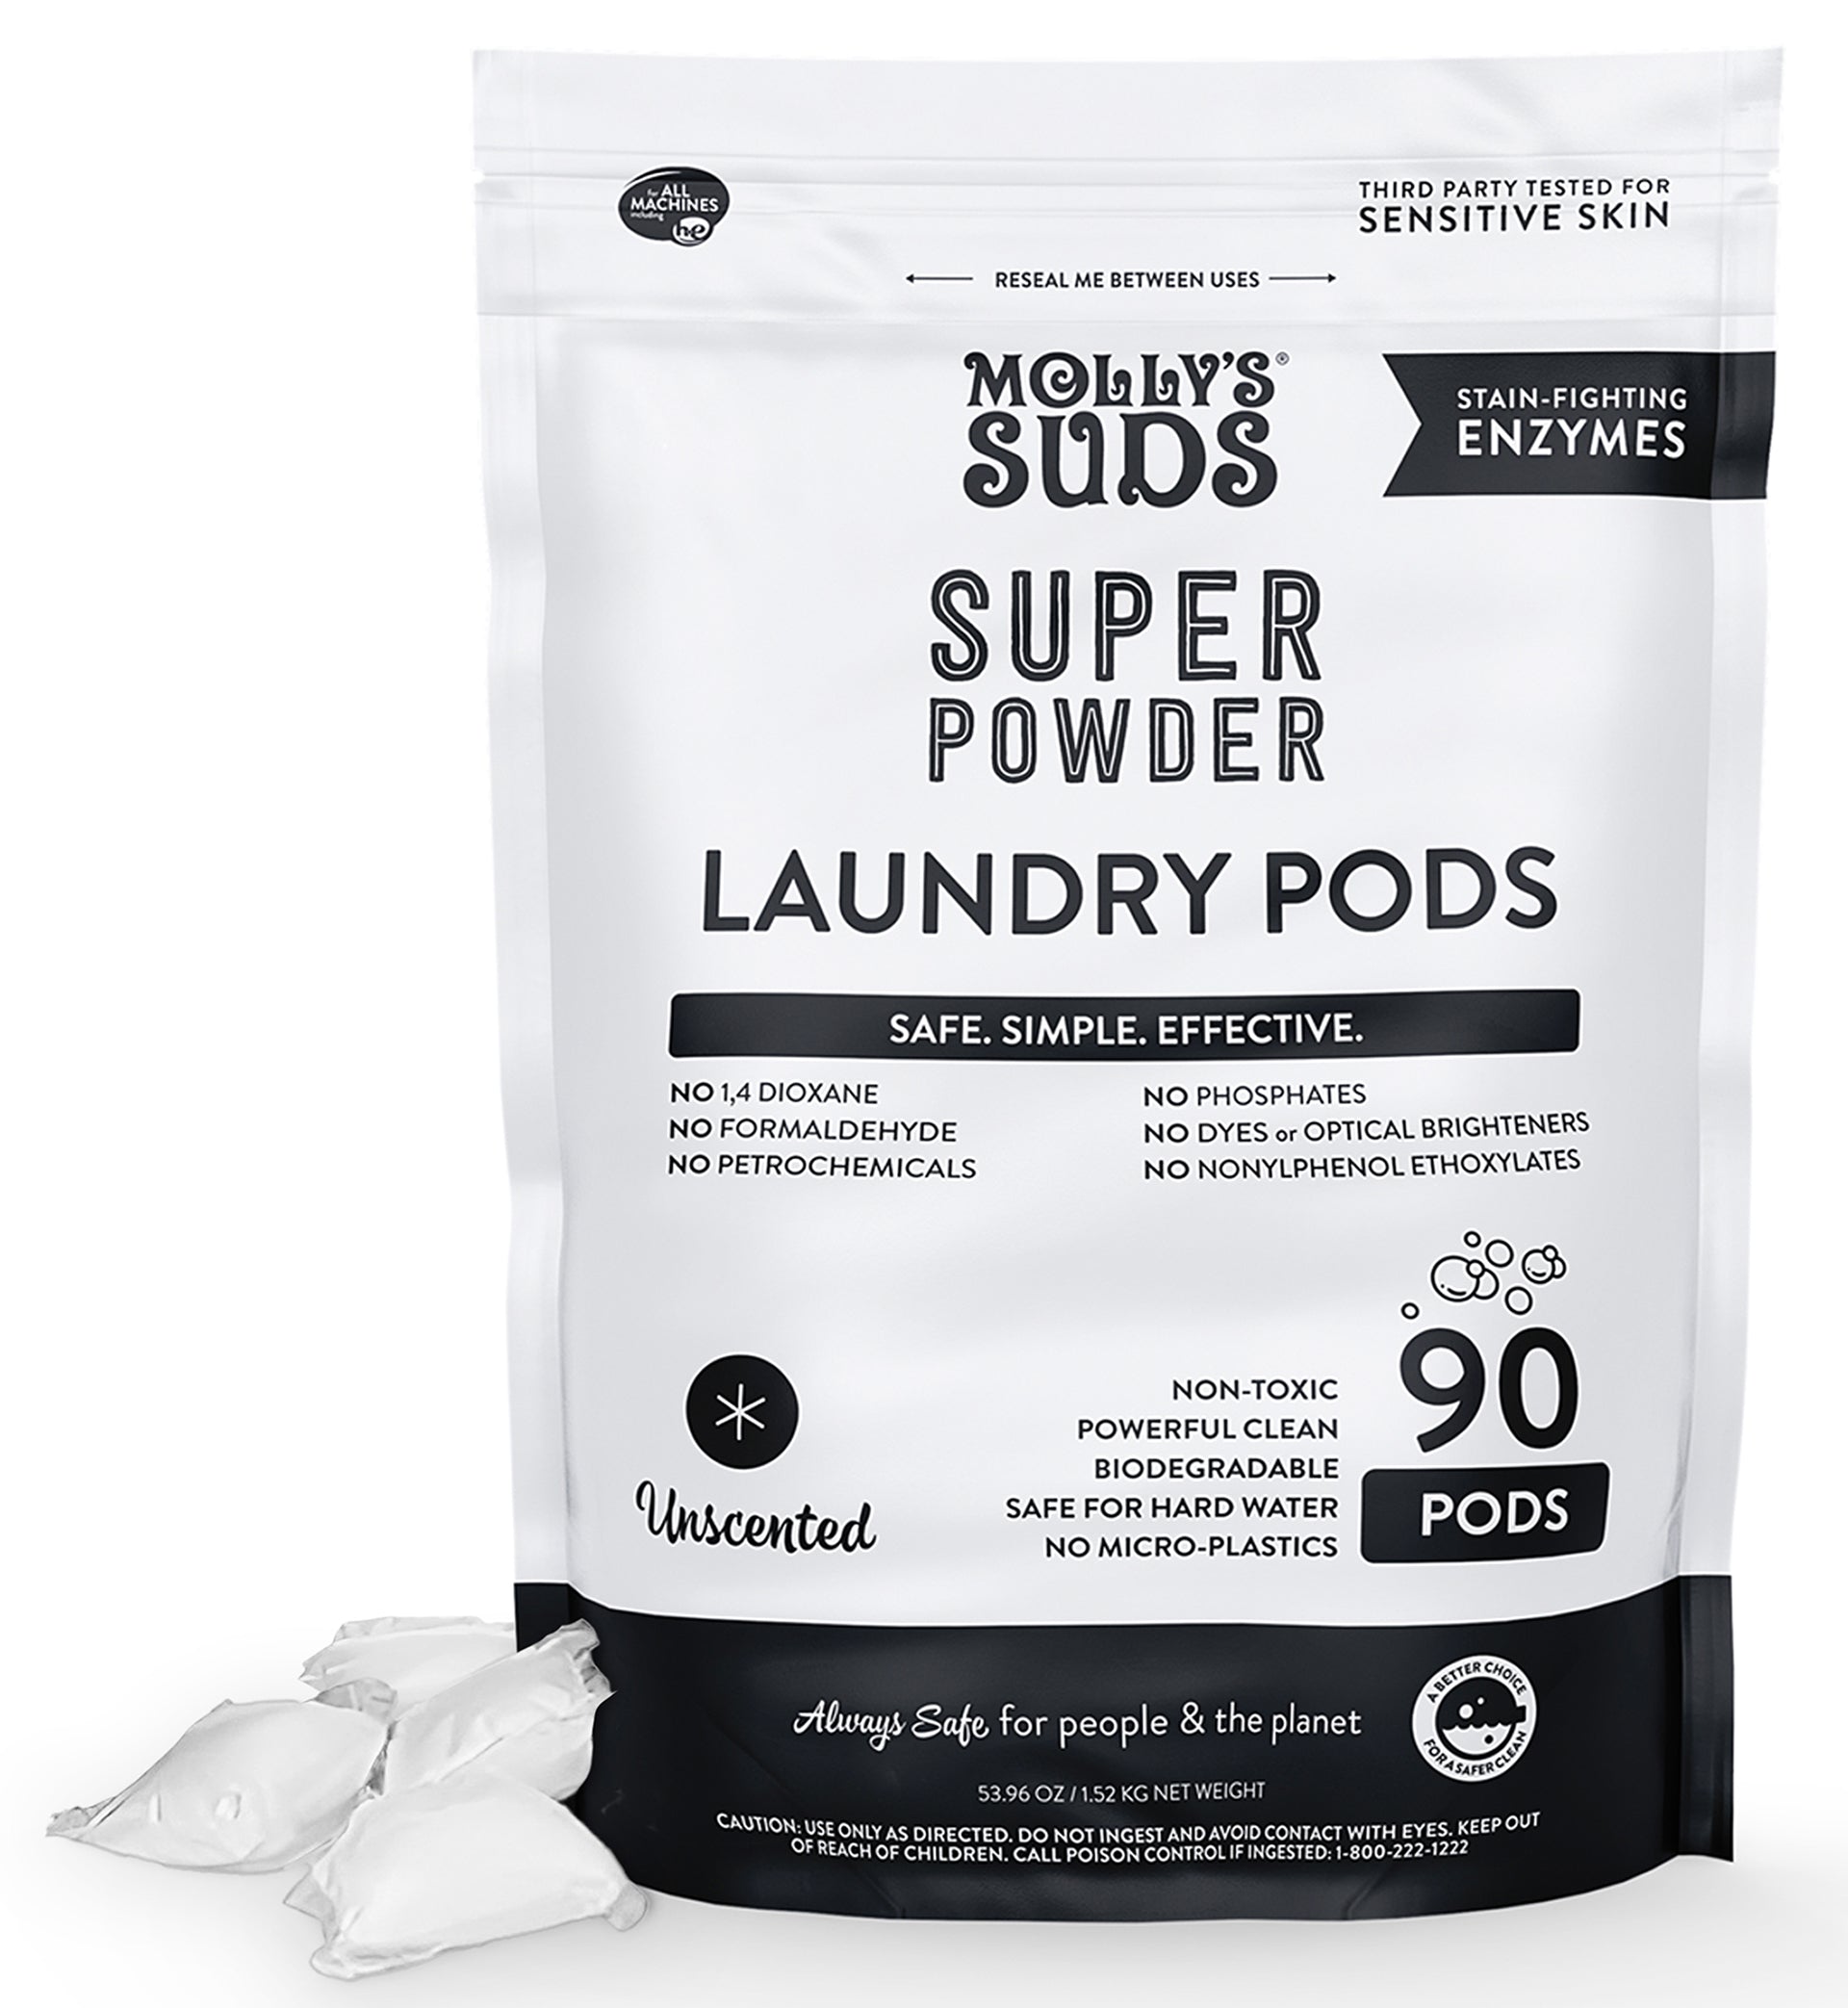  Molly's Suds Original Laundry Detergent Powder